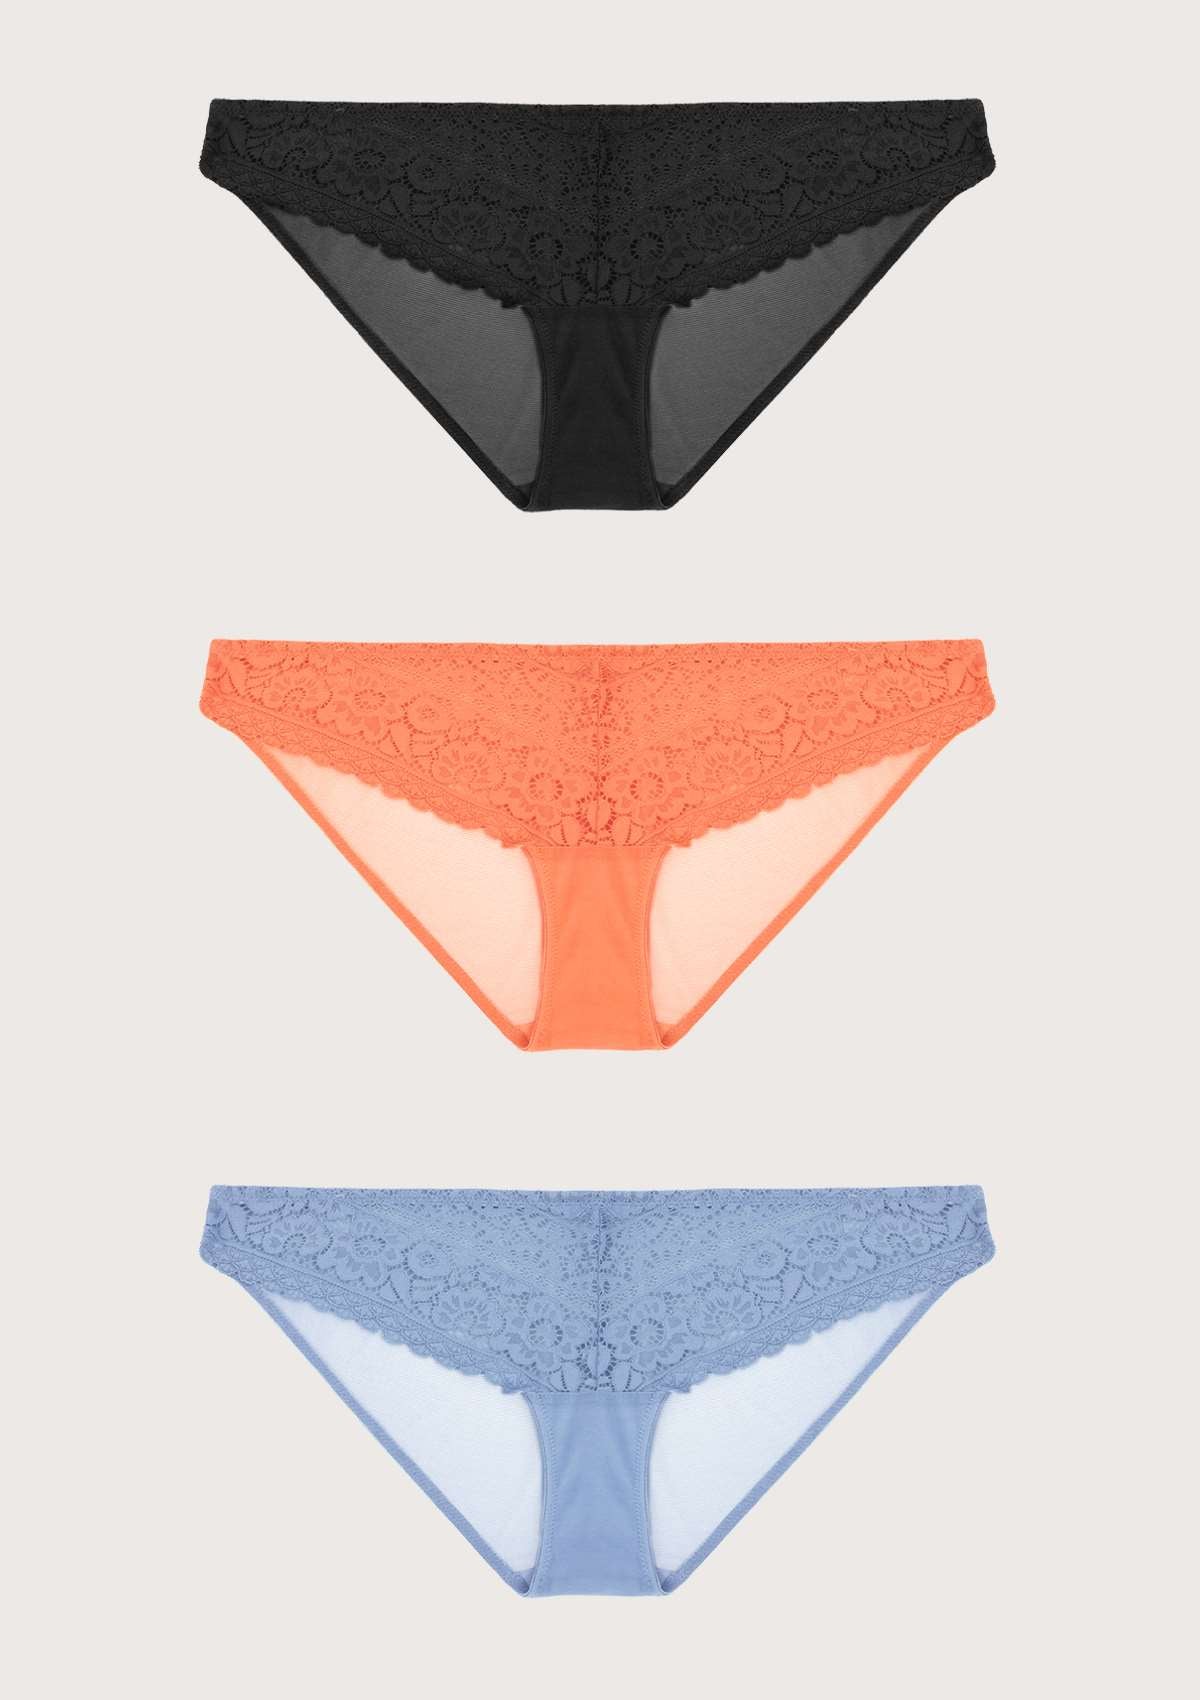 HSIA Leaf Flower Lace Bikini Panties 3 Pack - XL / Black+Orange+Blue